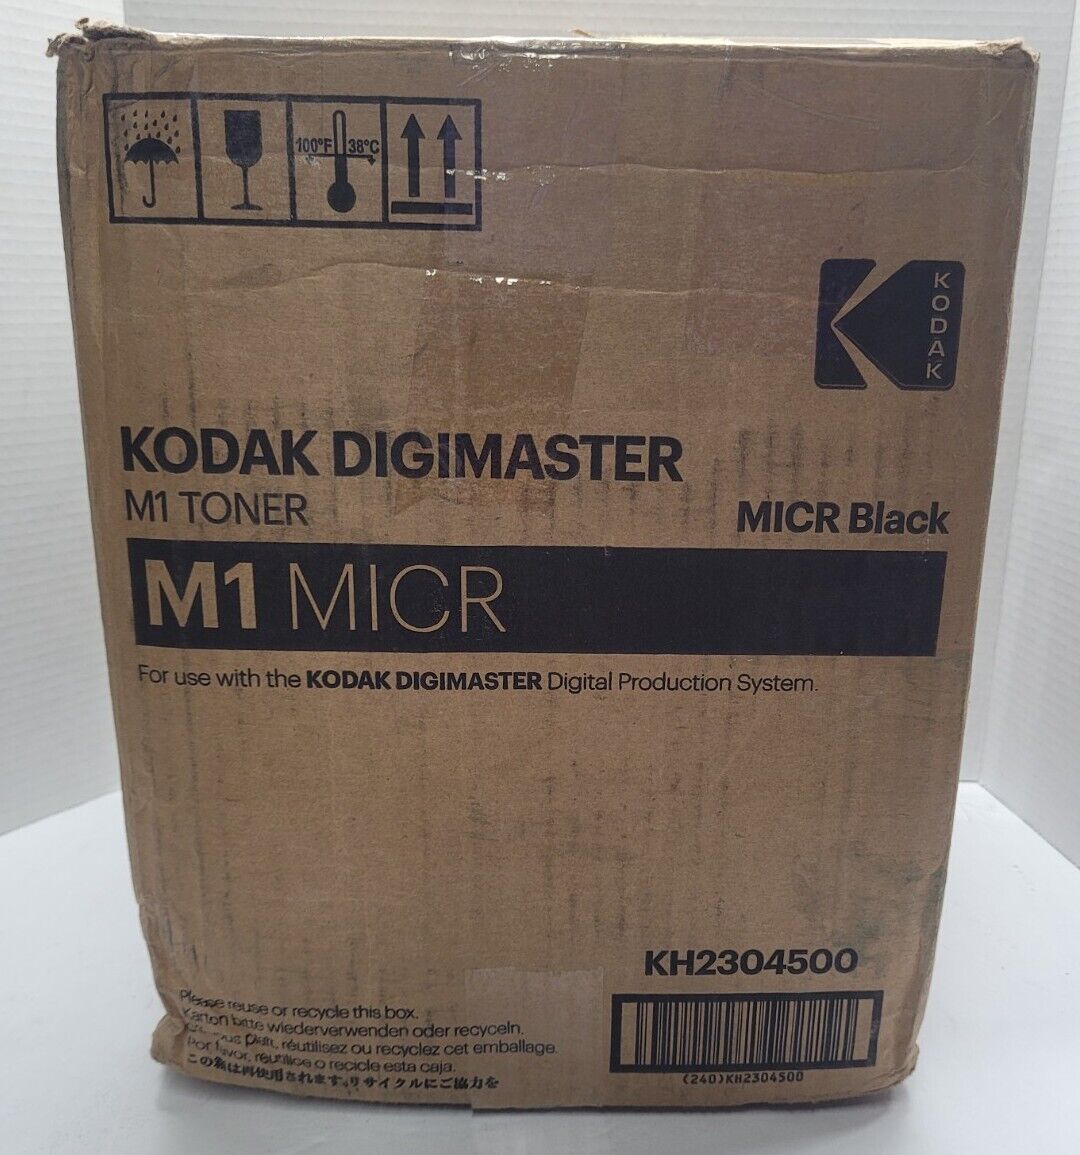 Kodak Digimaster M1 Toner M1 MICR Black KH2304500 